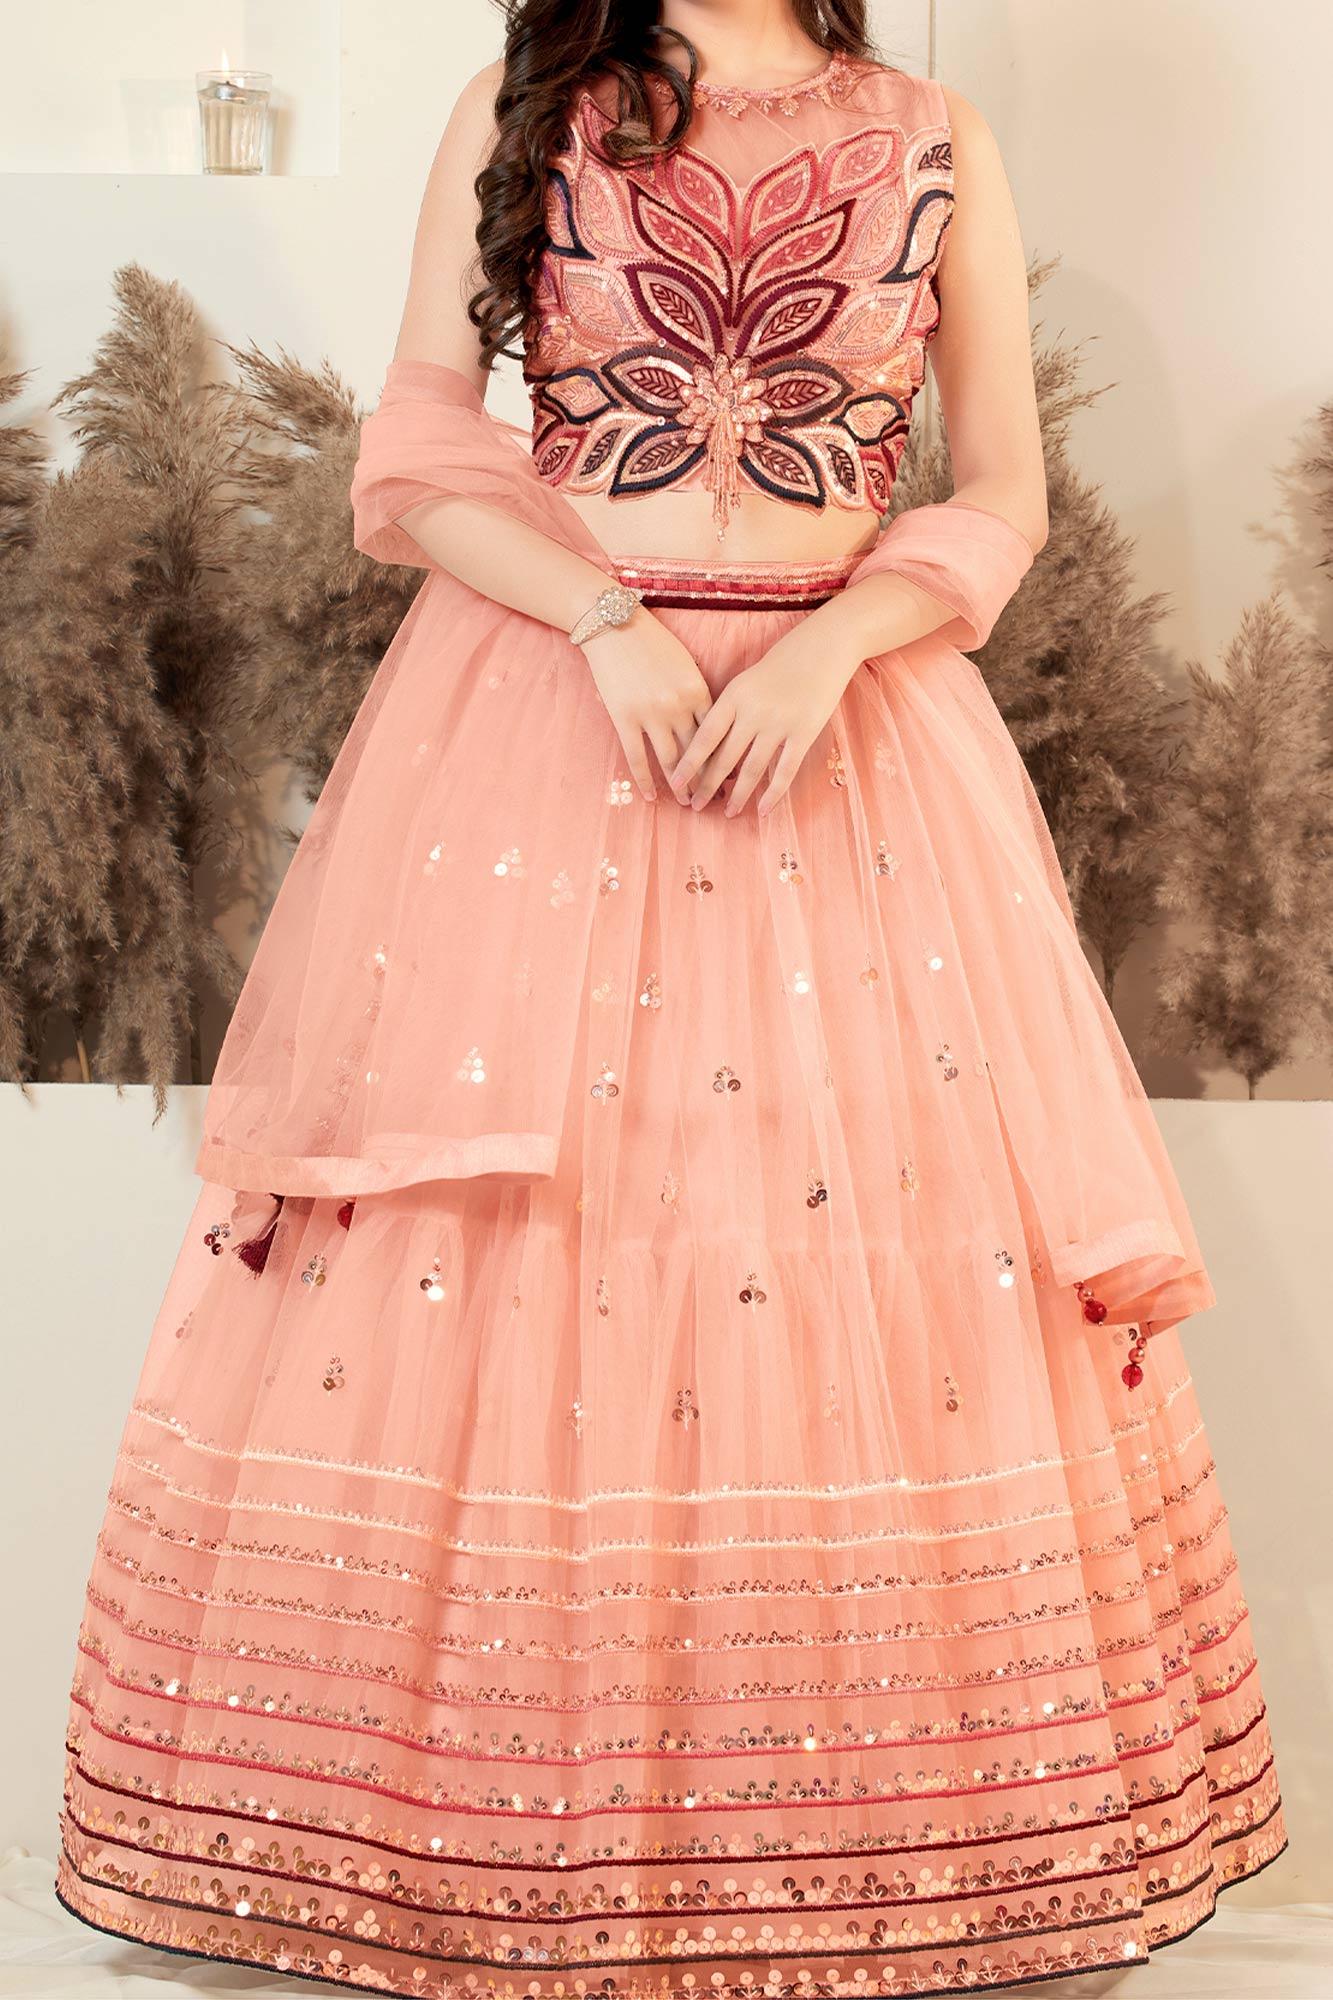 Lagorii Pretty Peach Princess Designer Lehenga Choli for Girls. - Lagorii Kids